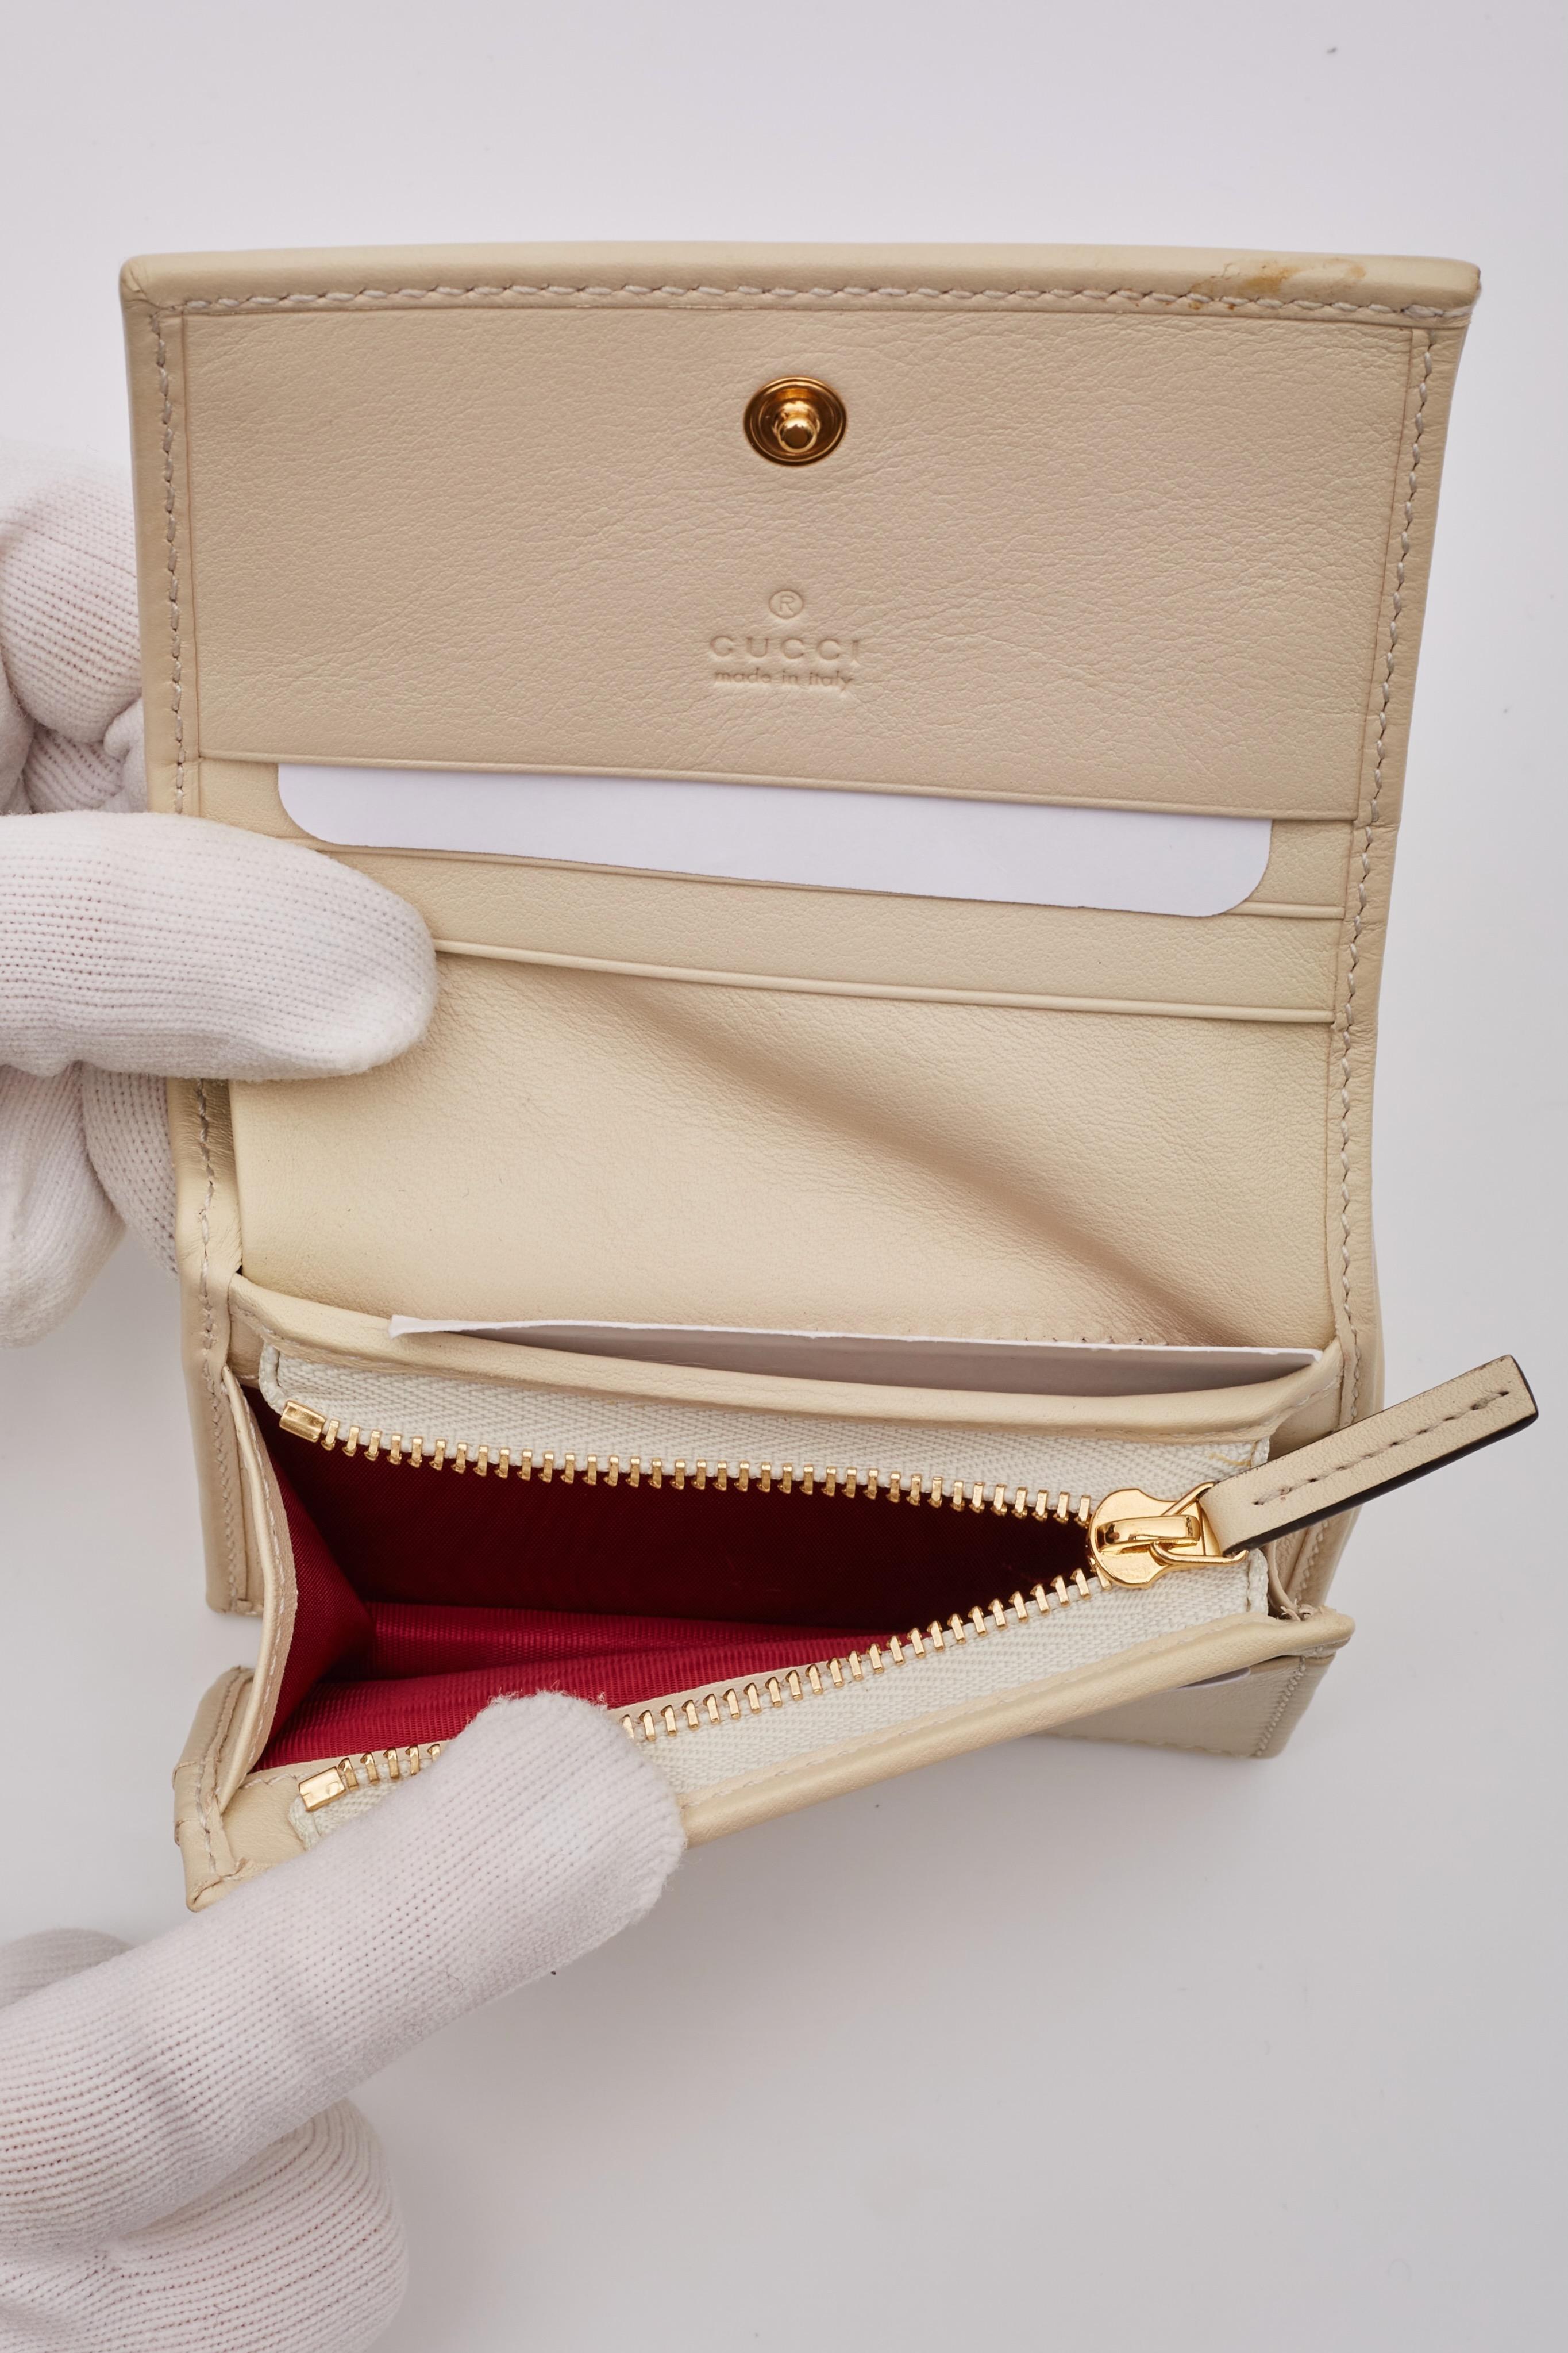 Gucci Calfskin Interlocking G Card Holder Case Mystic White For Sale 6